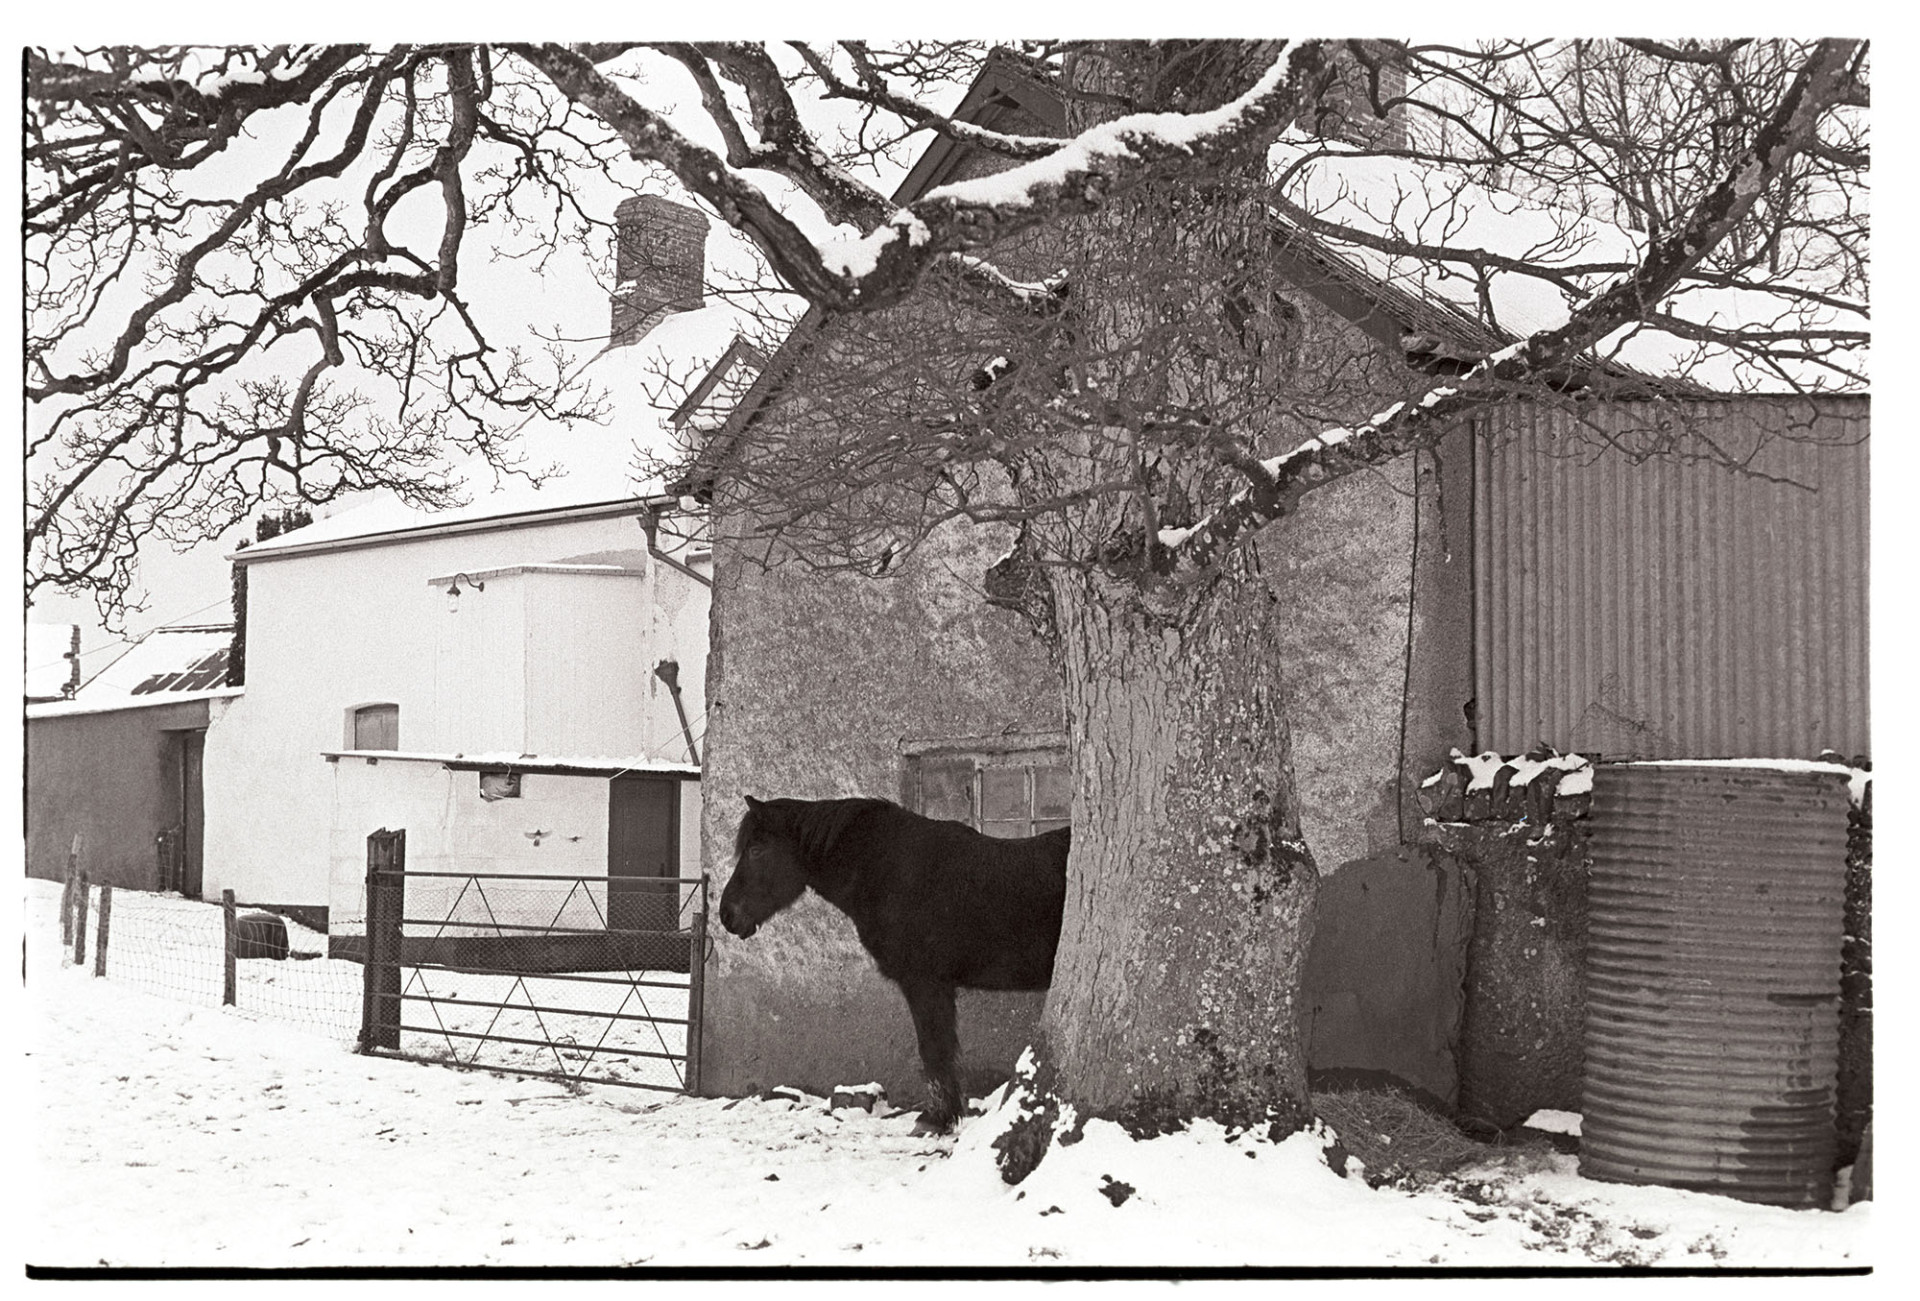 Snow scene with pony standing under tree behind farm.
[A snowy scene at Parsonage Farm, Iddesleigh, with a pony standing under a tree behind the farm.]